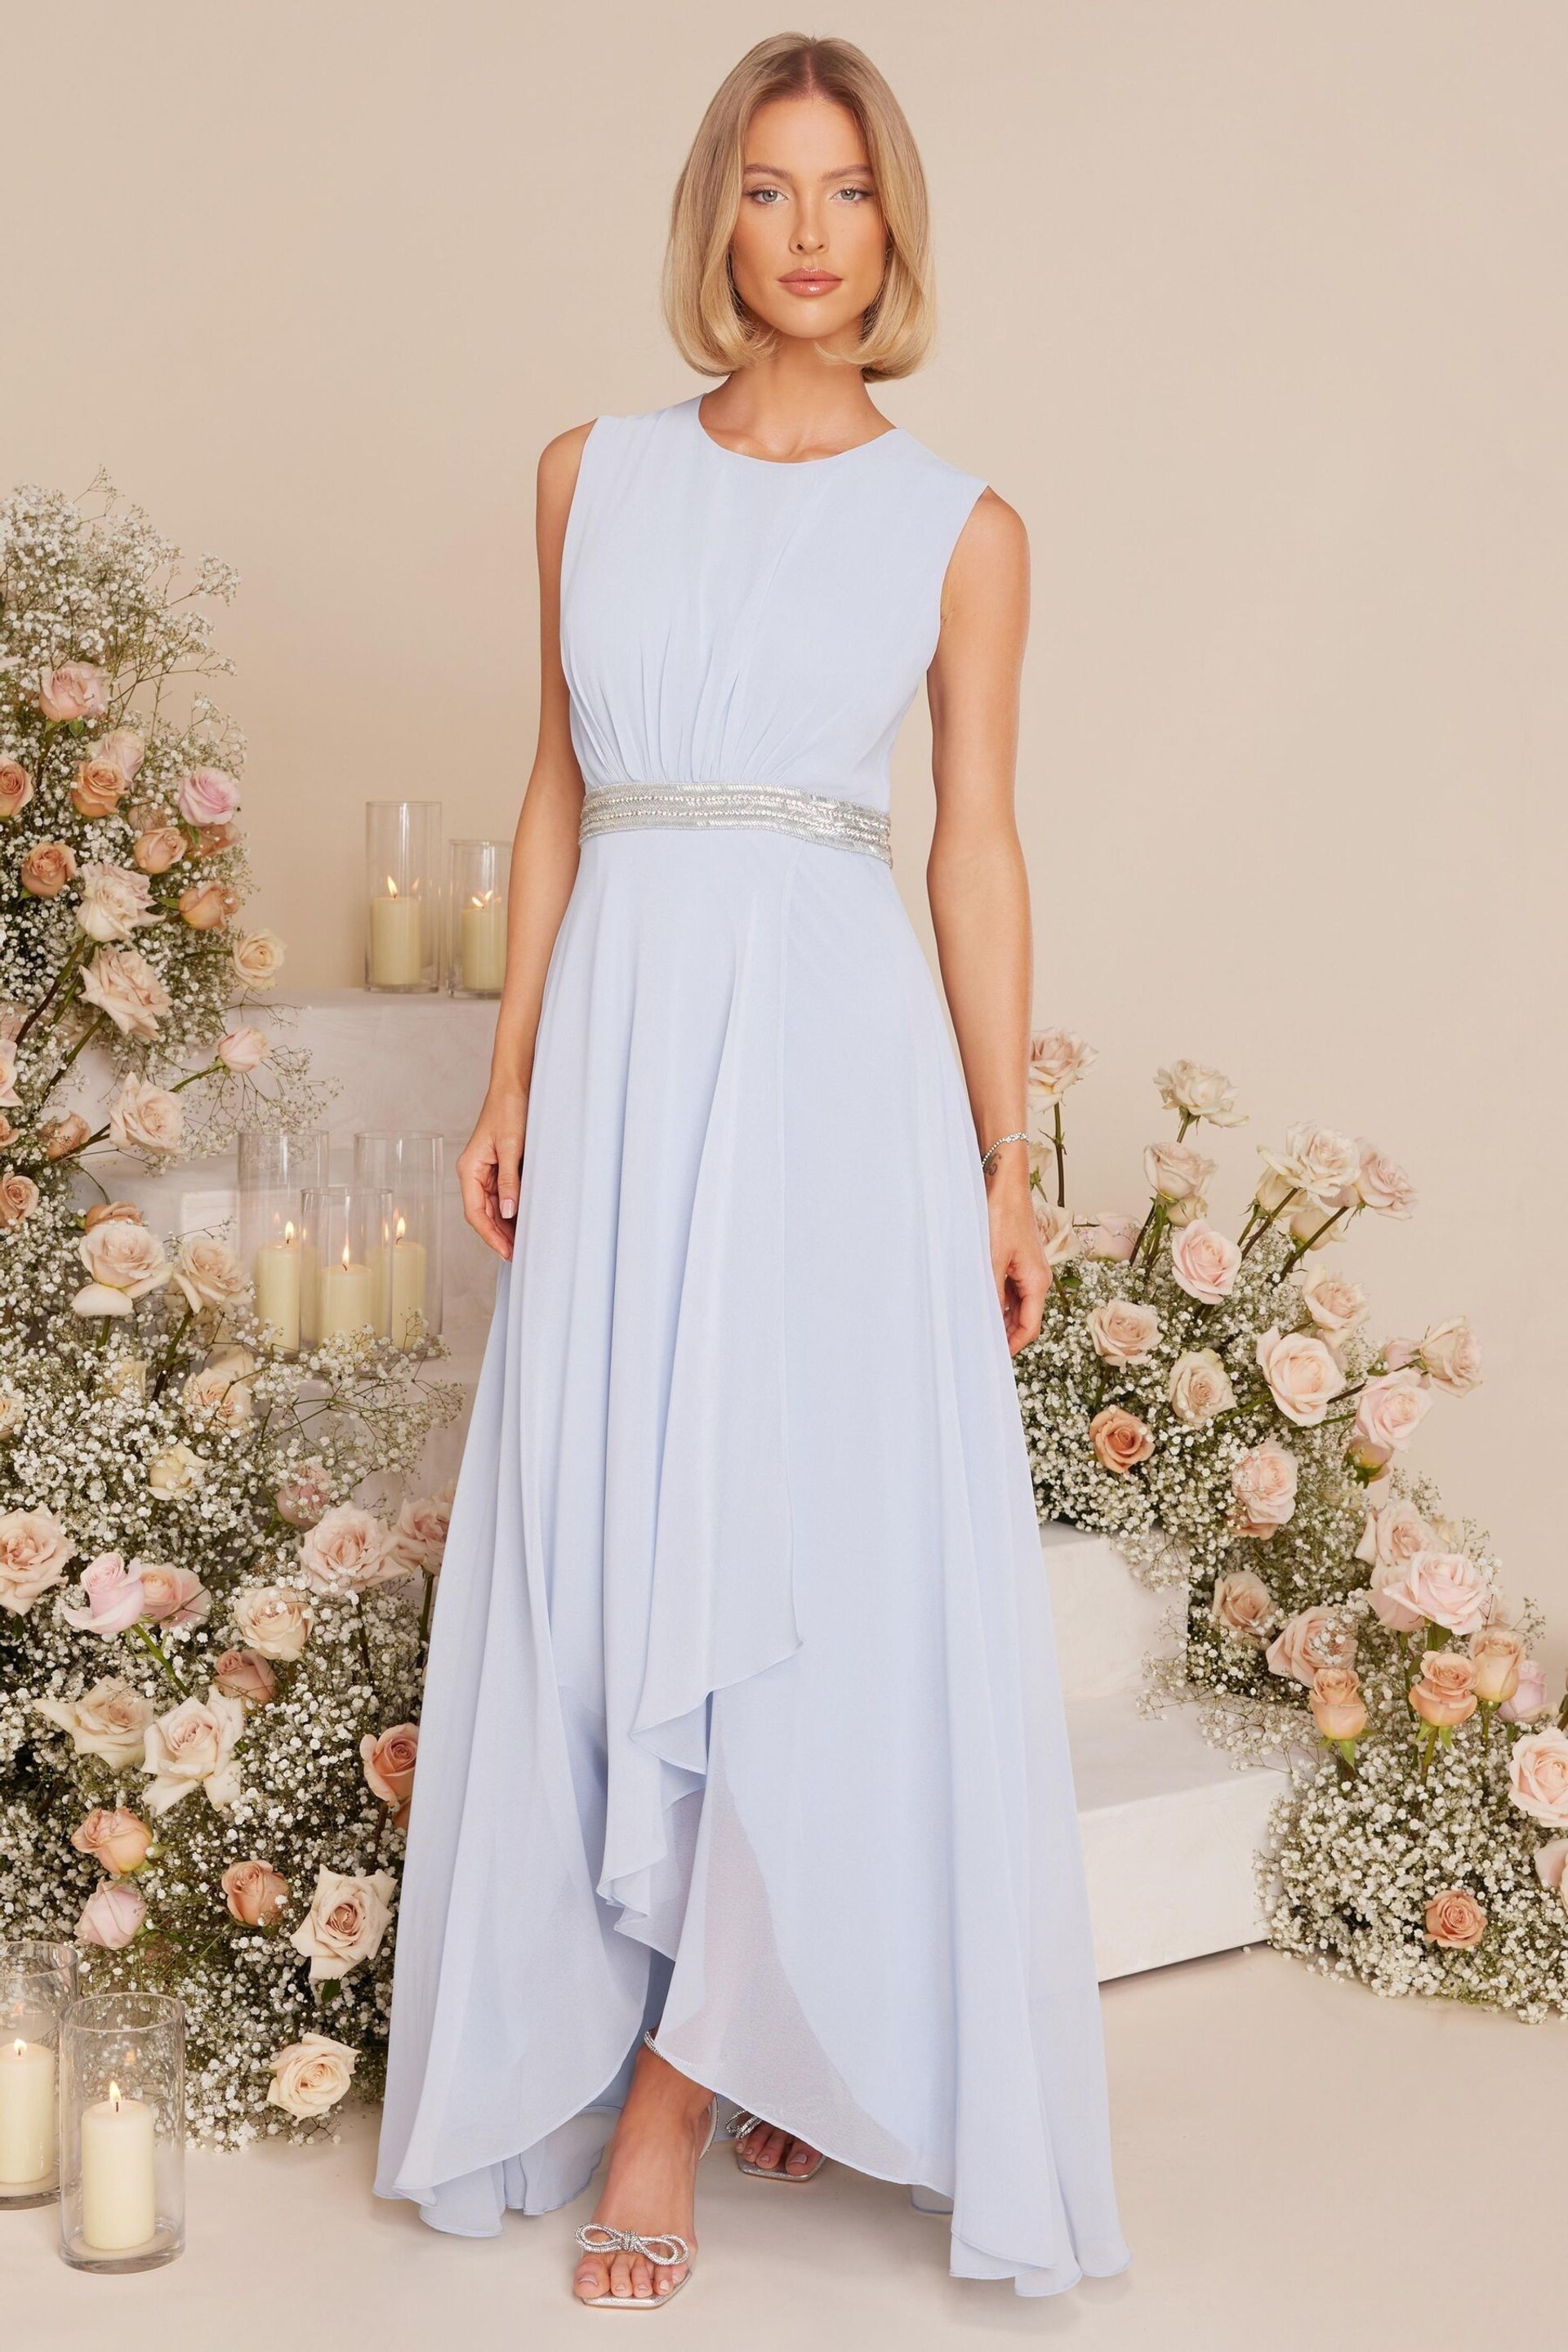 Quiz Light Blue Chiffon Maxi Bridesmaid Dress with Sequin Belt - Image 1 of 8